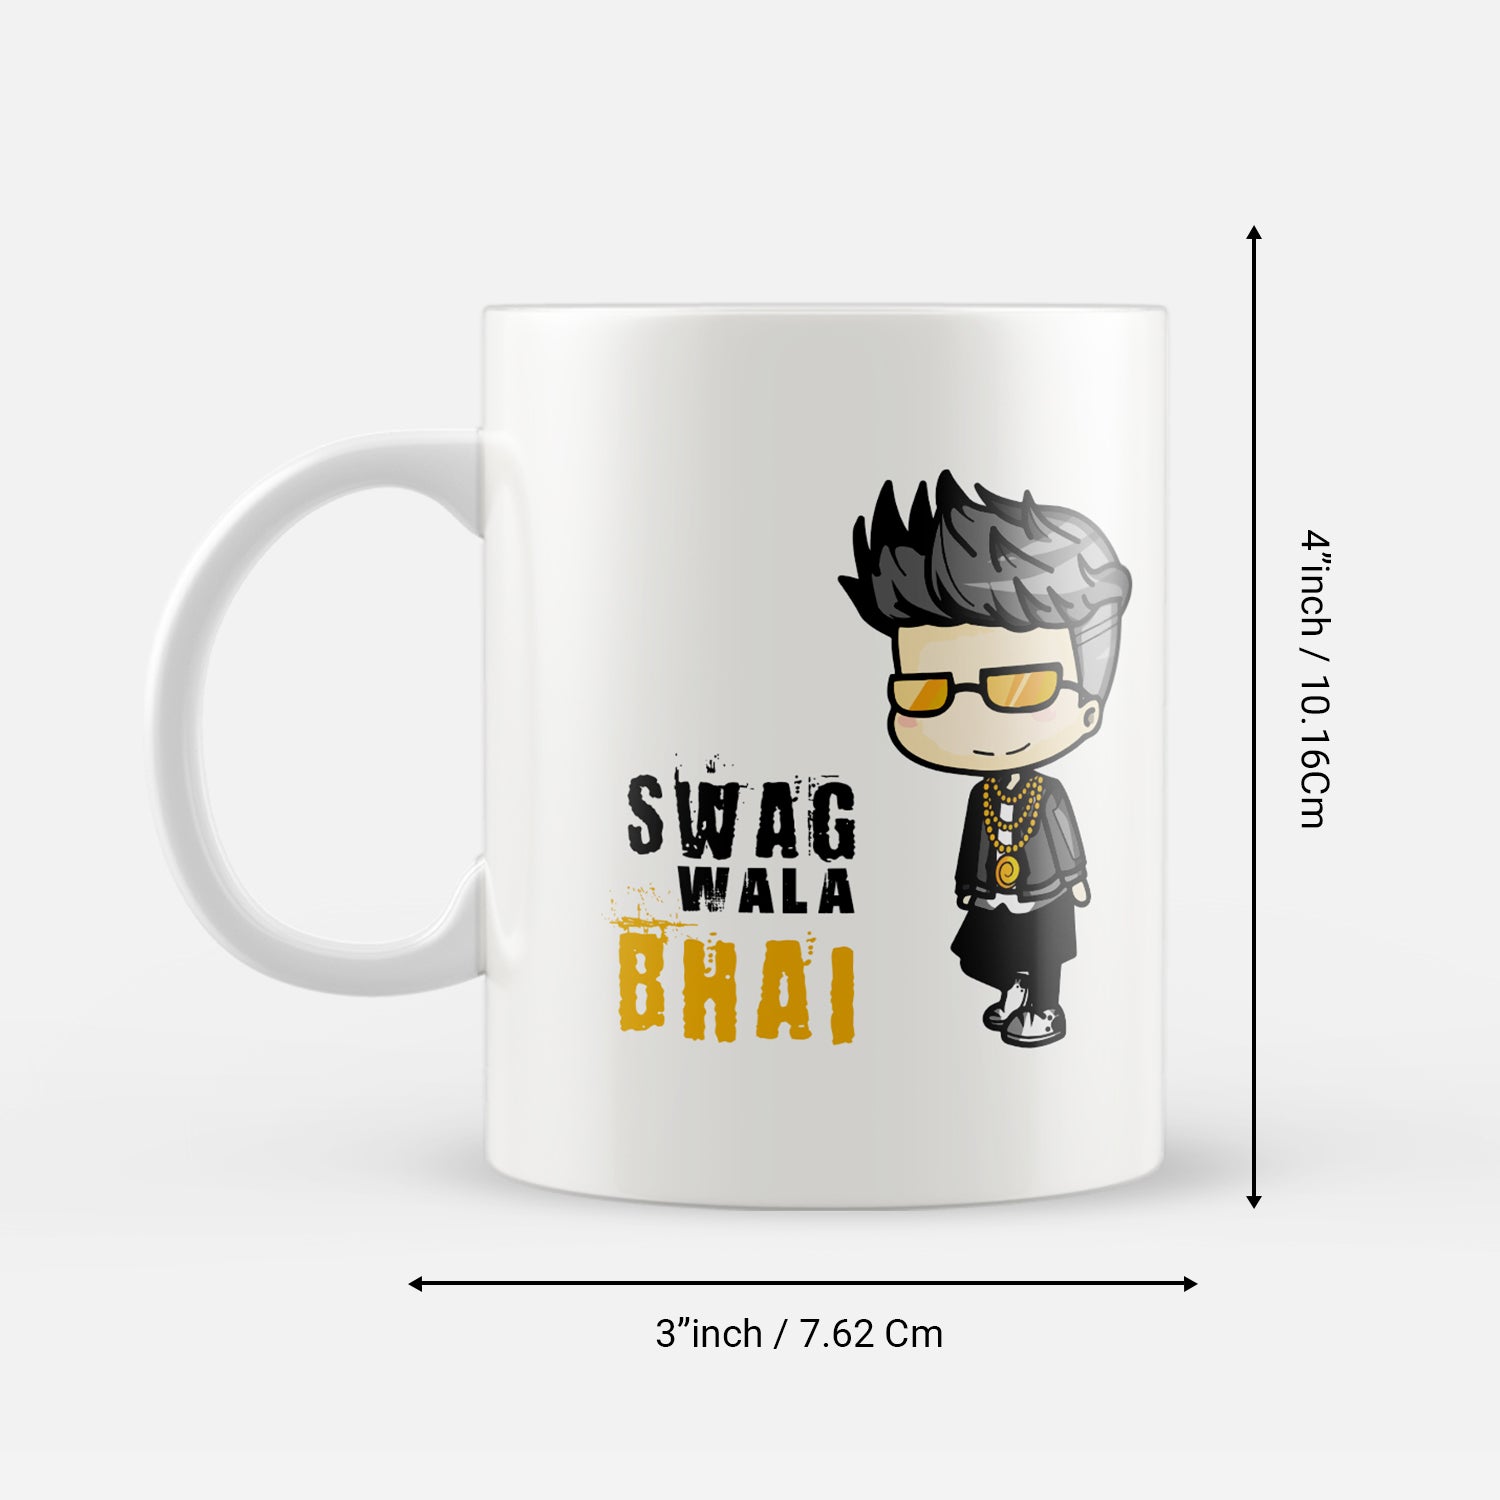 "Swag wala Bhai" Brother Ceramic Coffee/Tea Mug 3